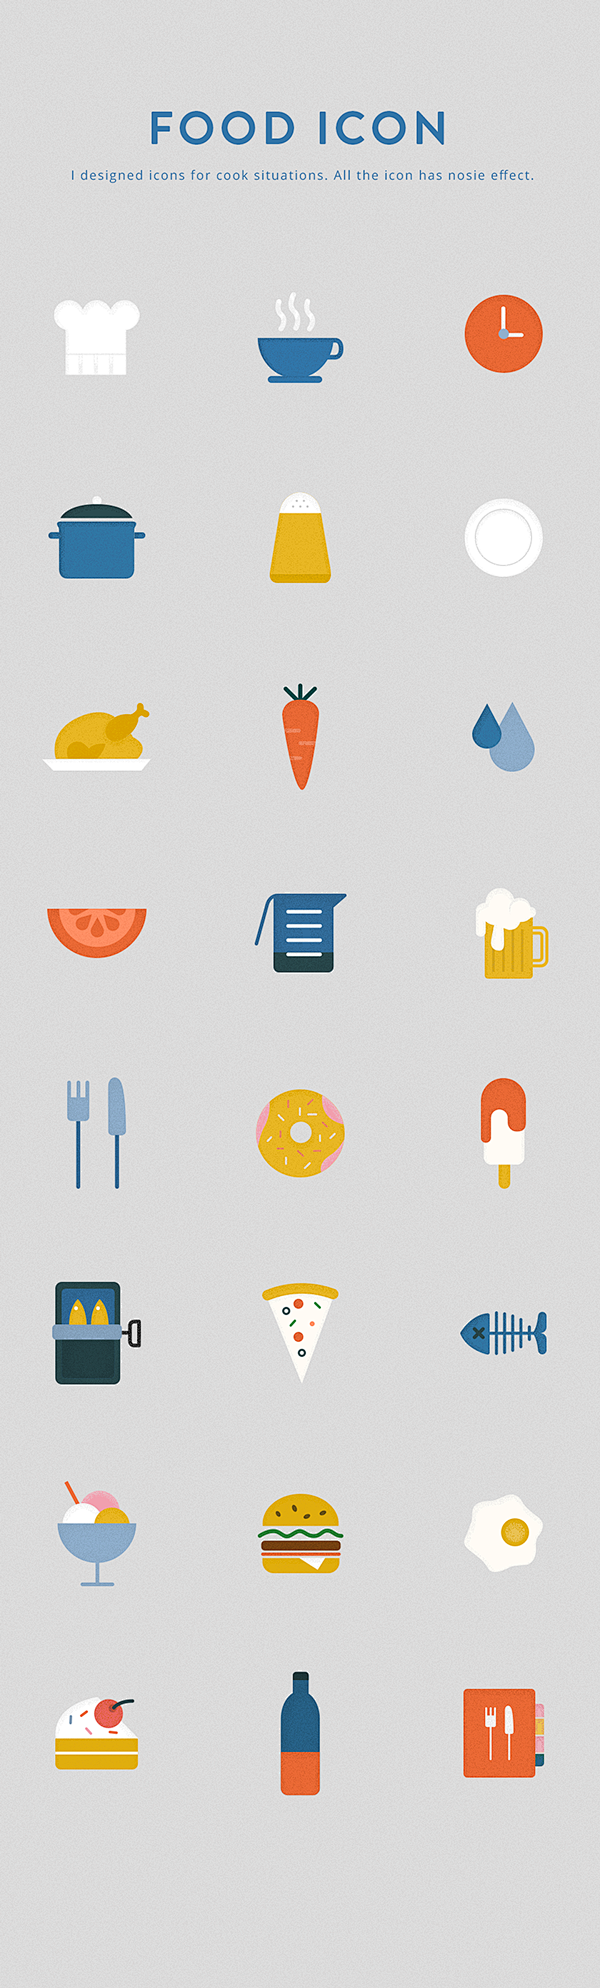 Food icon : Food ico...